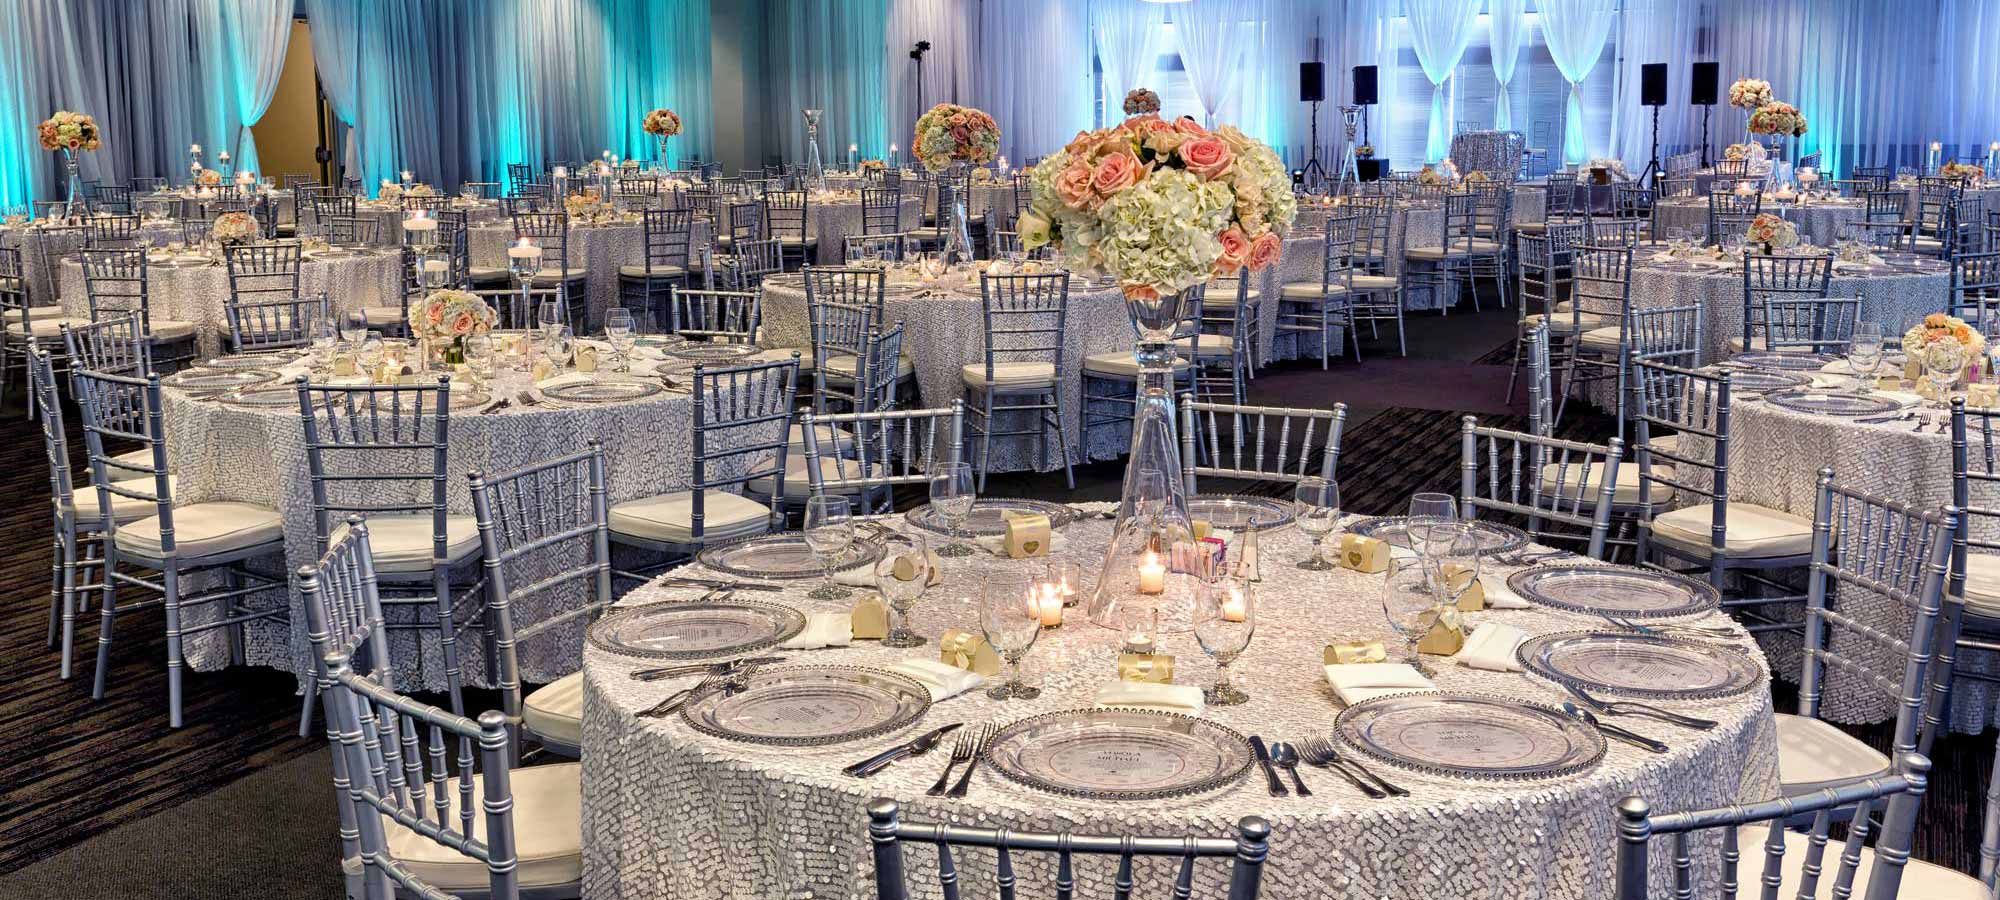 Red Oak Ballroom Houston CityCentre fabulous Wedding setup